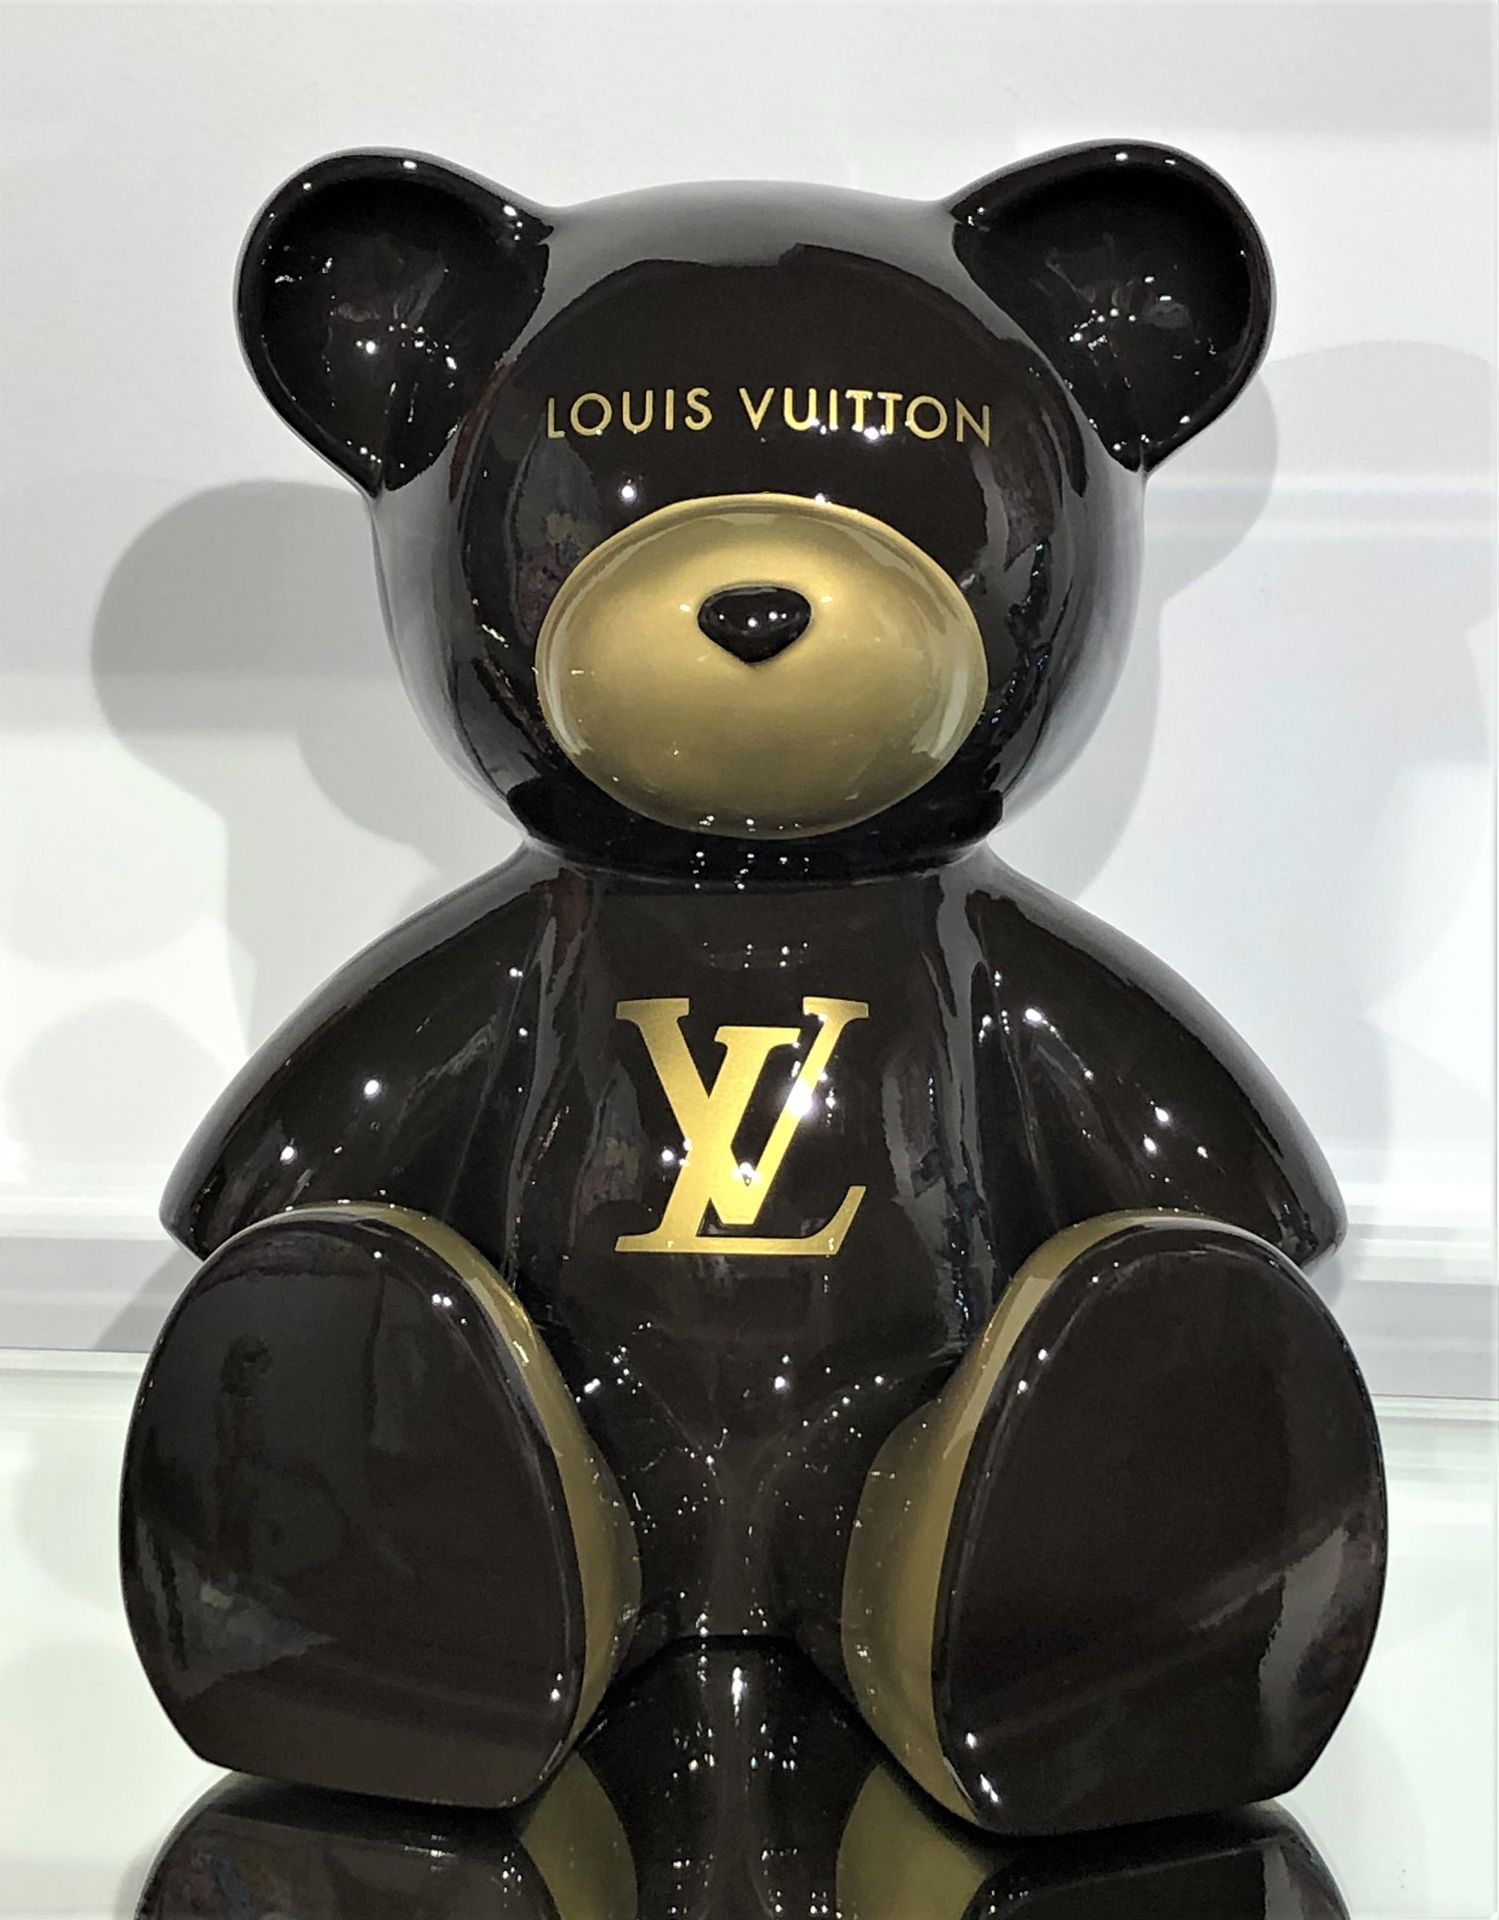 Ian Philip Ian Philip - Teddy Bear LV

Handsignierte Skulptur aus Kunstharz

Ein&hellip;